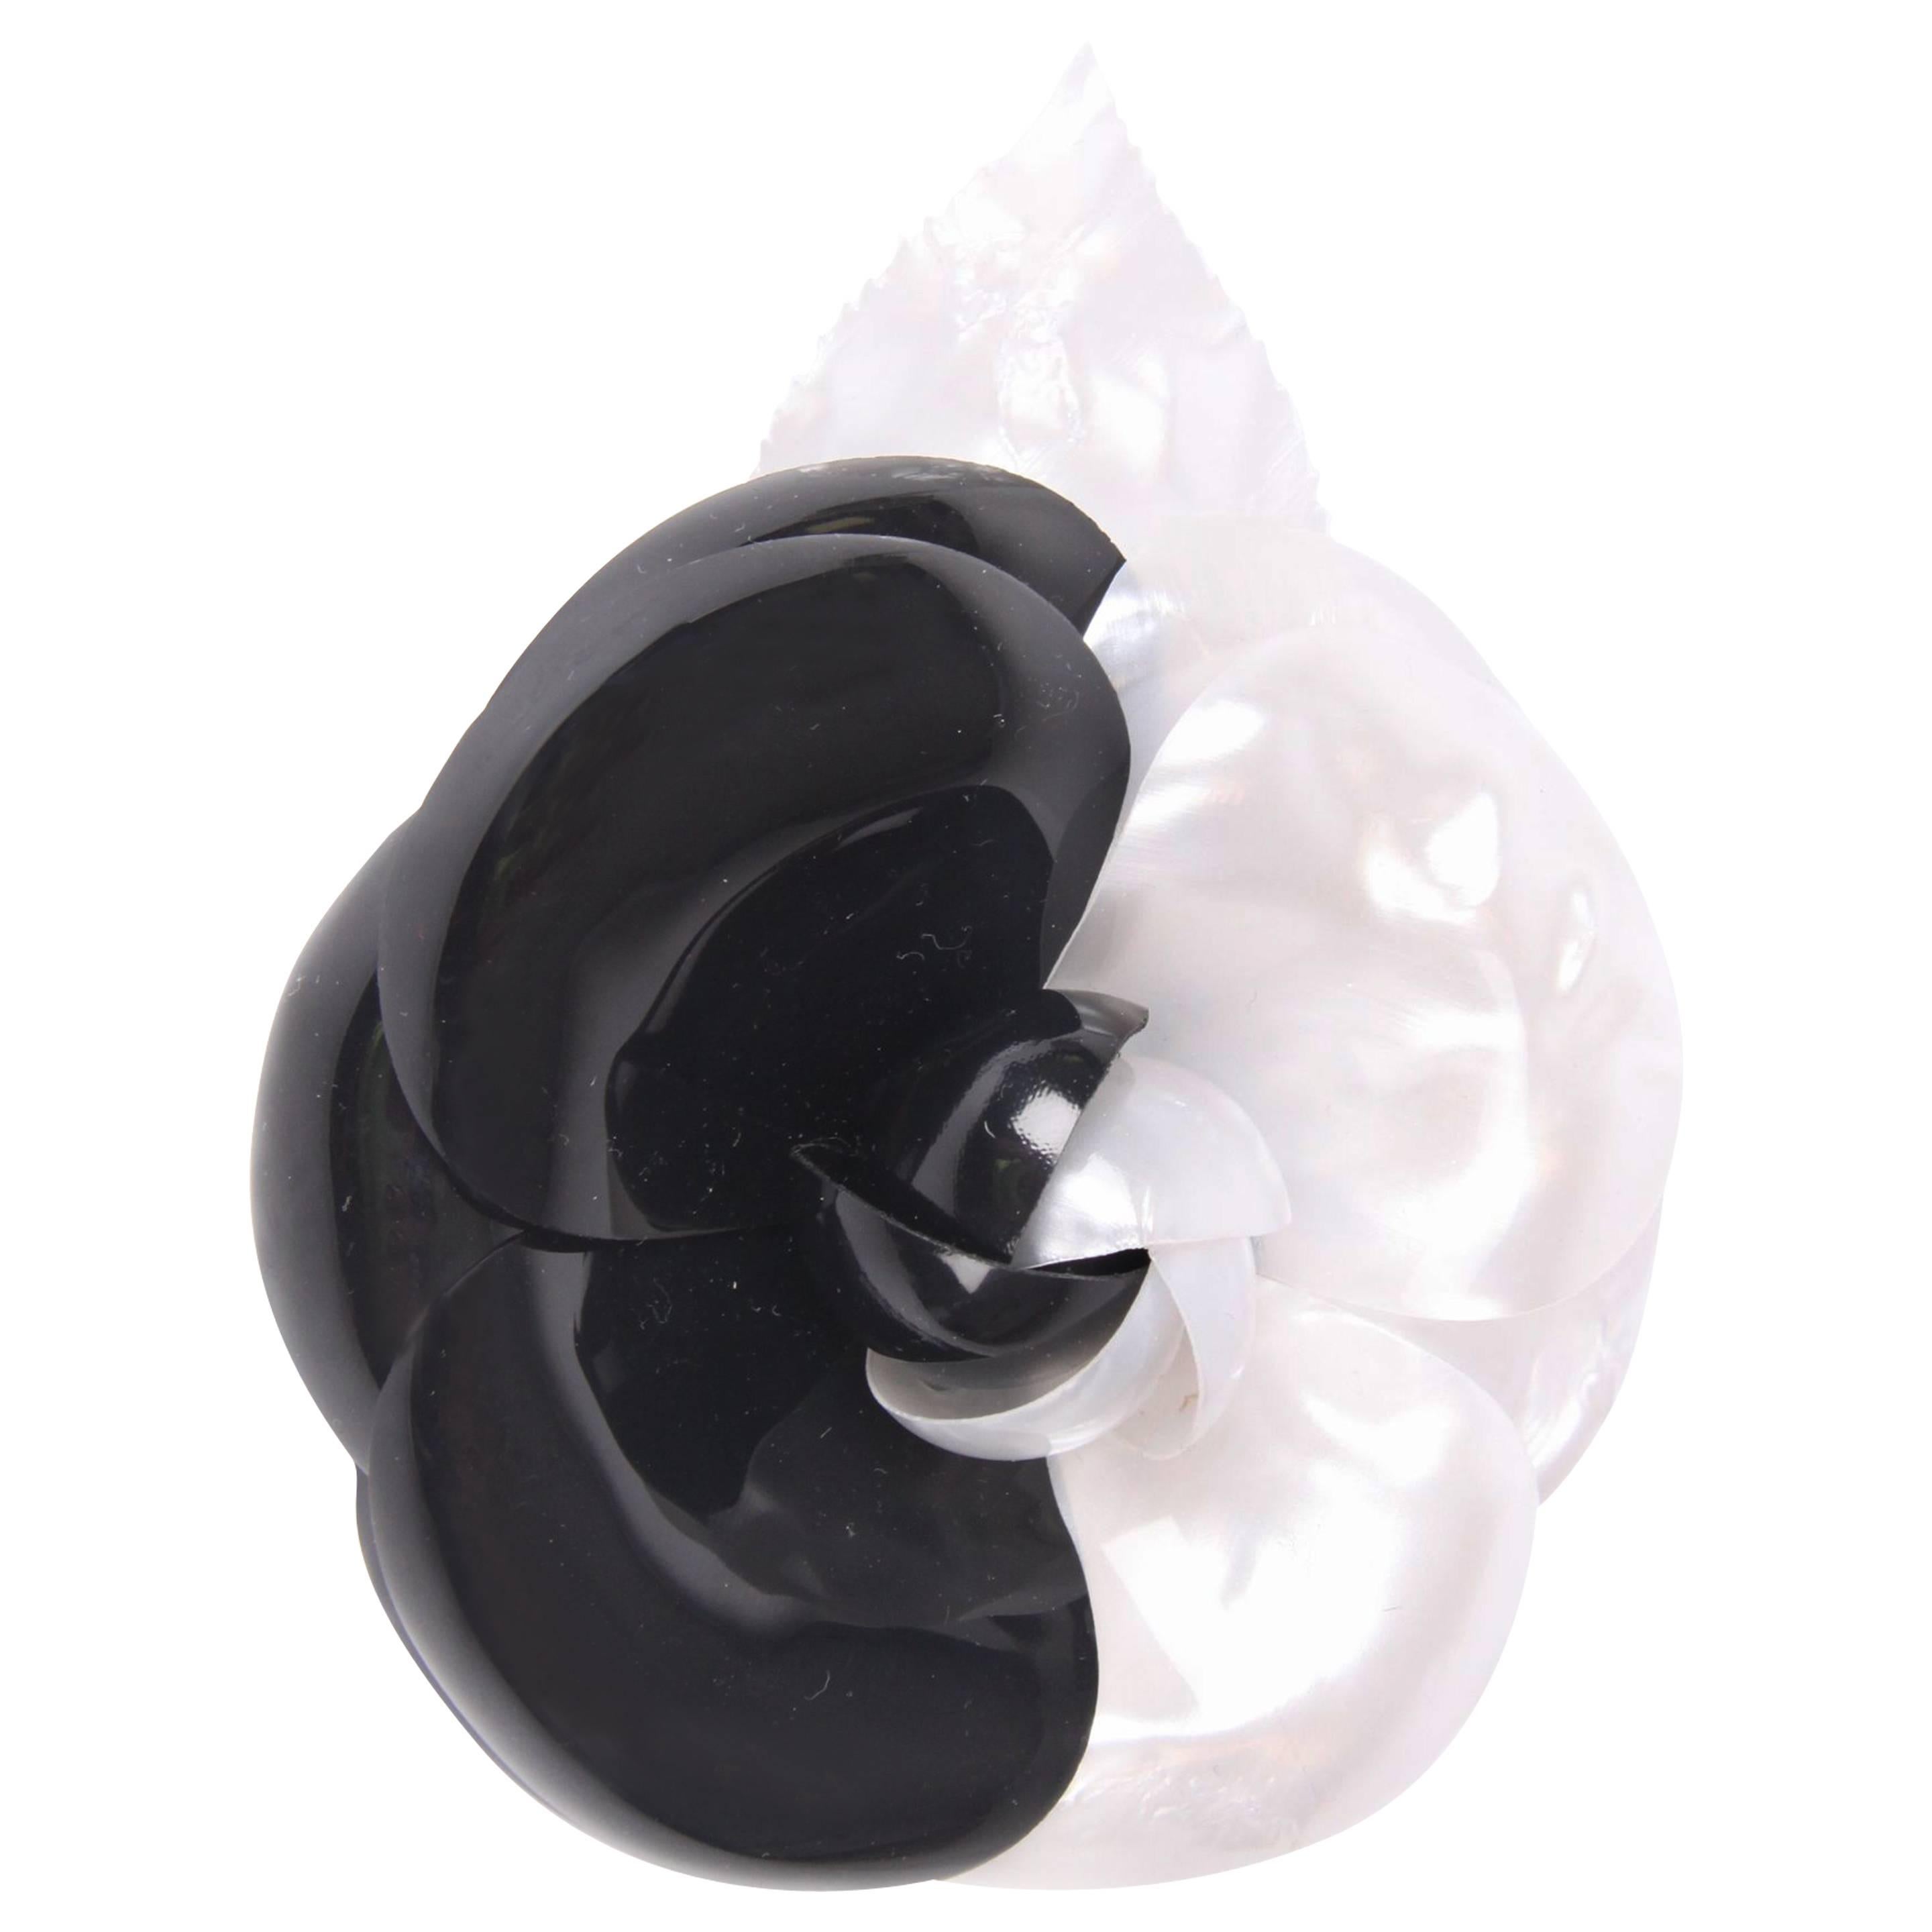 Chanel Camellia Flower Brooch Pin - black & white